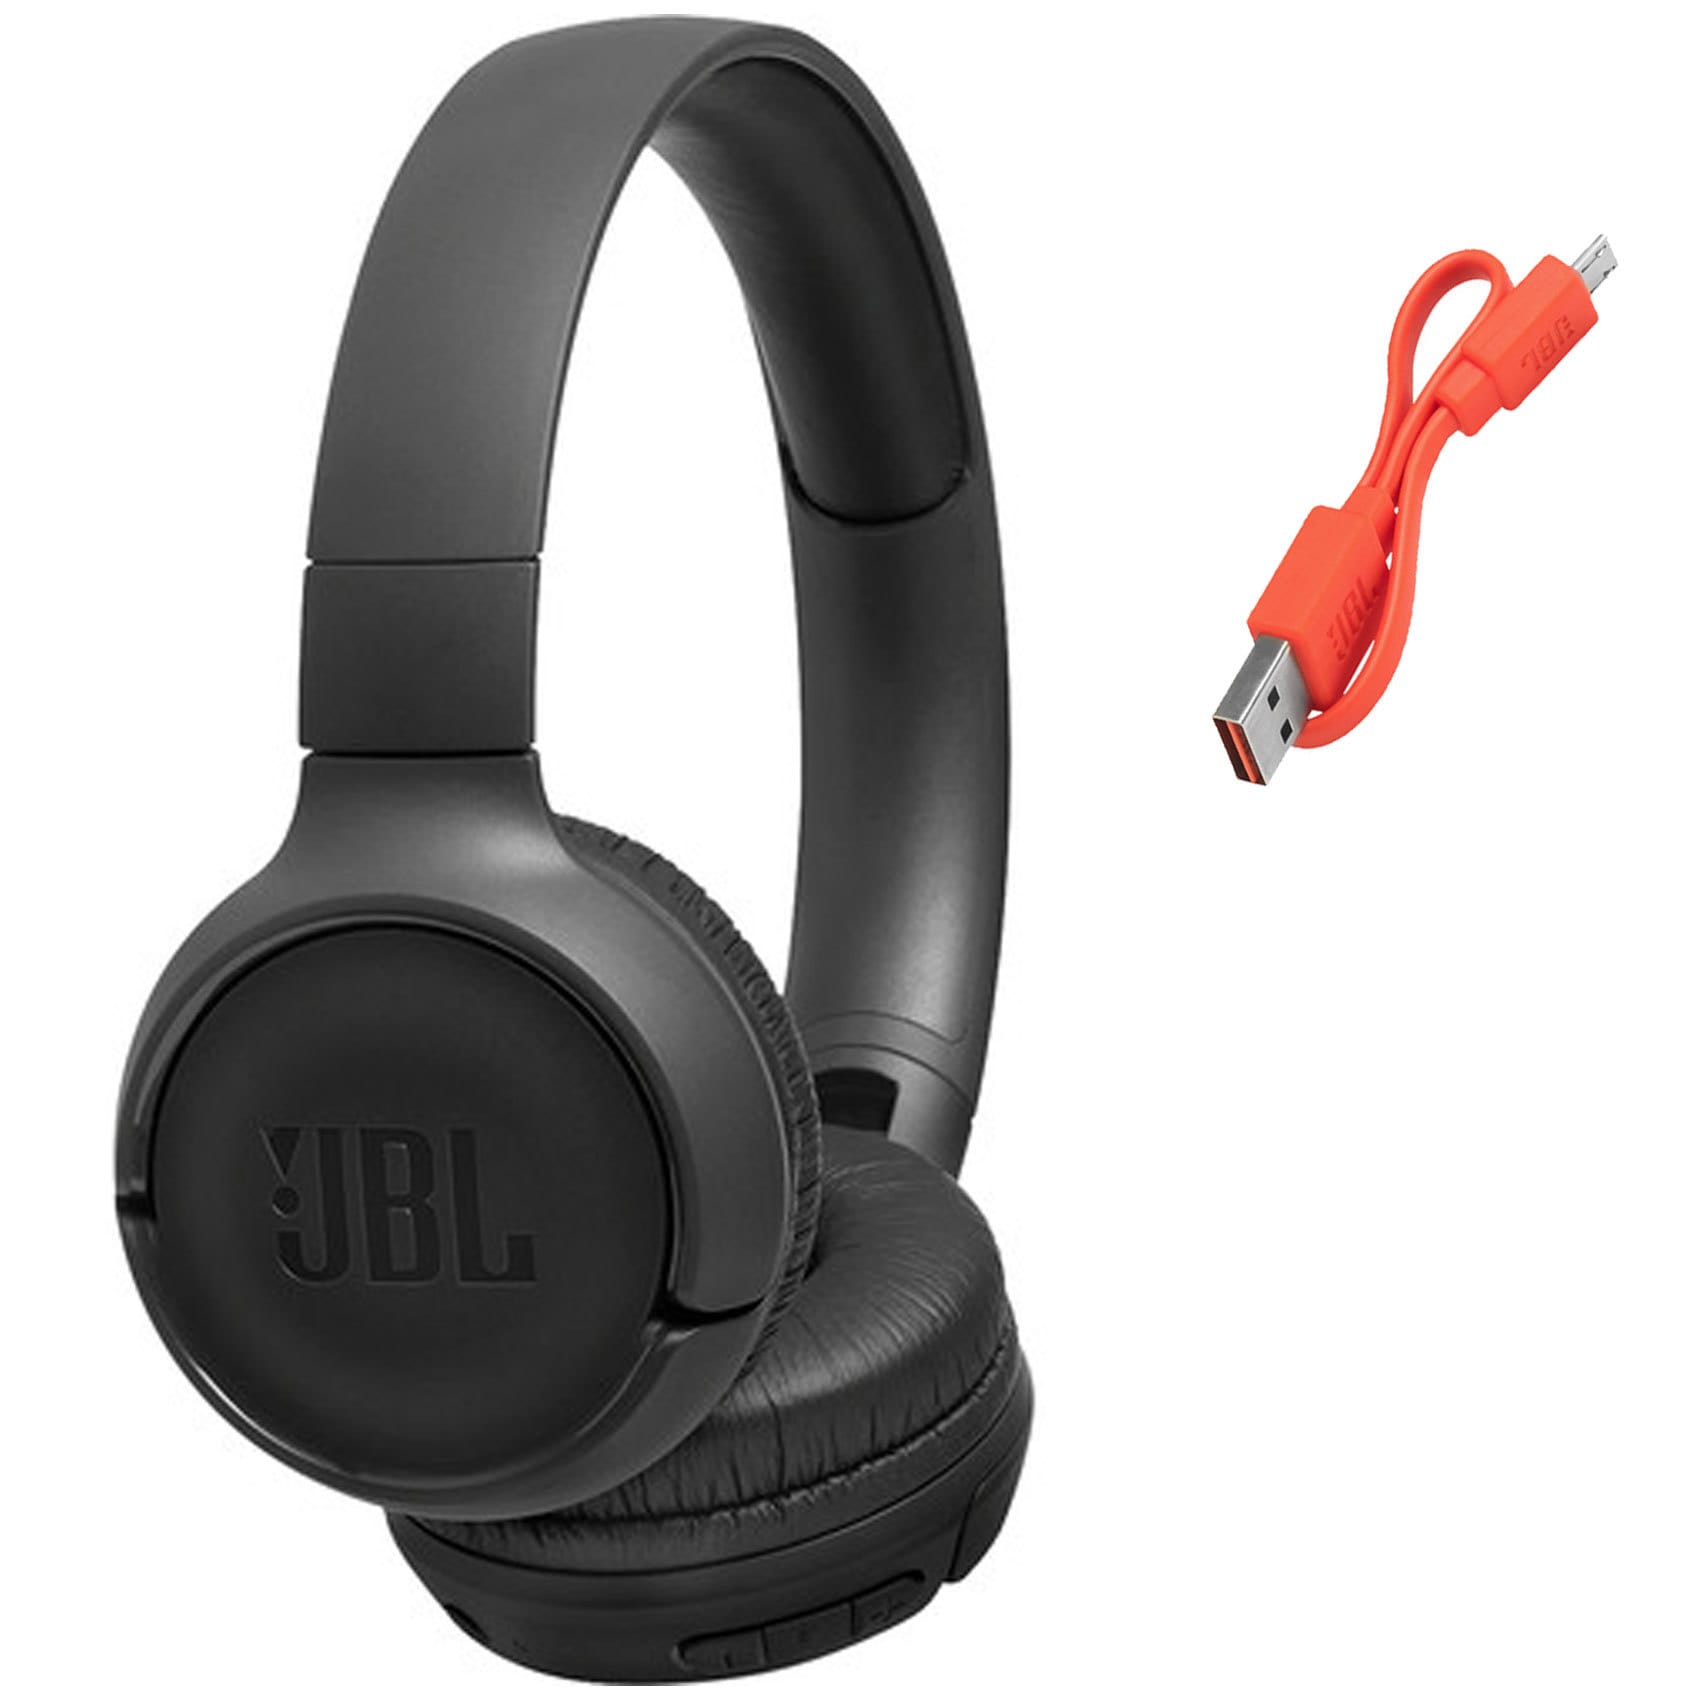 Buy Jbl Bluetooth Headphone Tune T500bt Black Online Shop Smartphones Tablets Wearables On Carrefour Uae